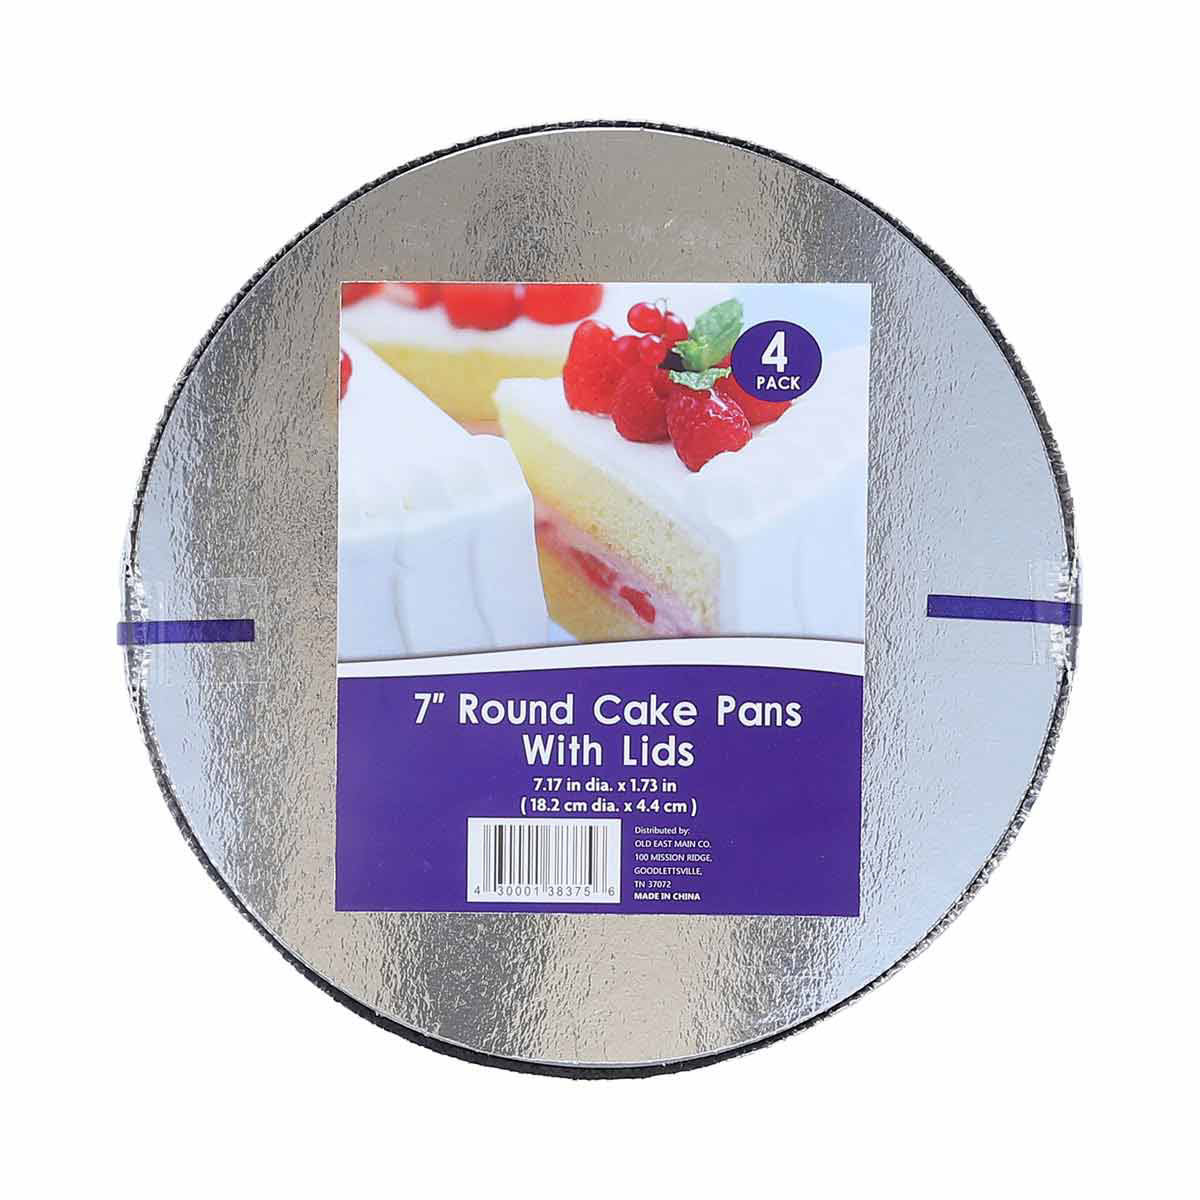 Jiffy Foil Aluminum Cake Pans with Lids, 2-Pack